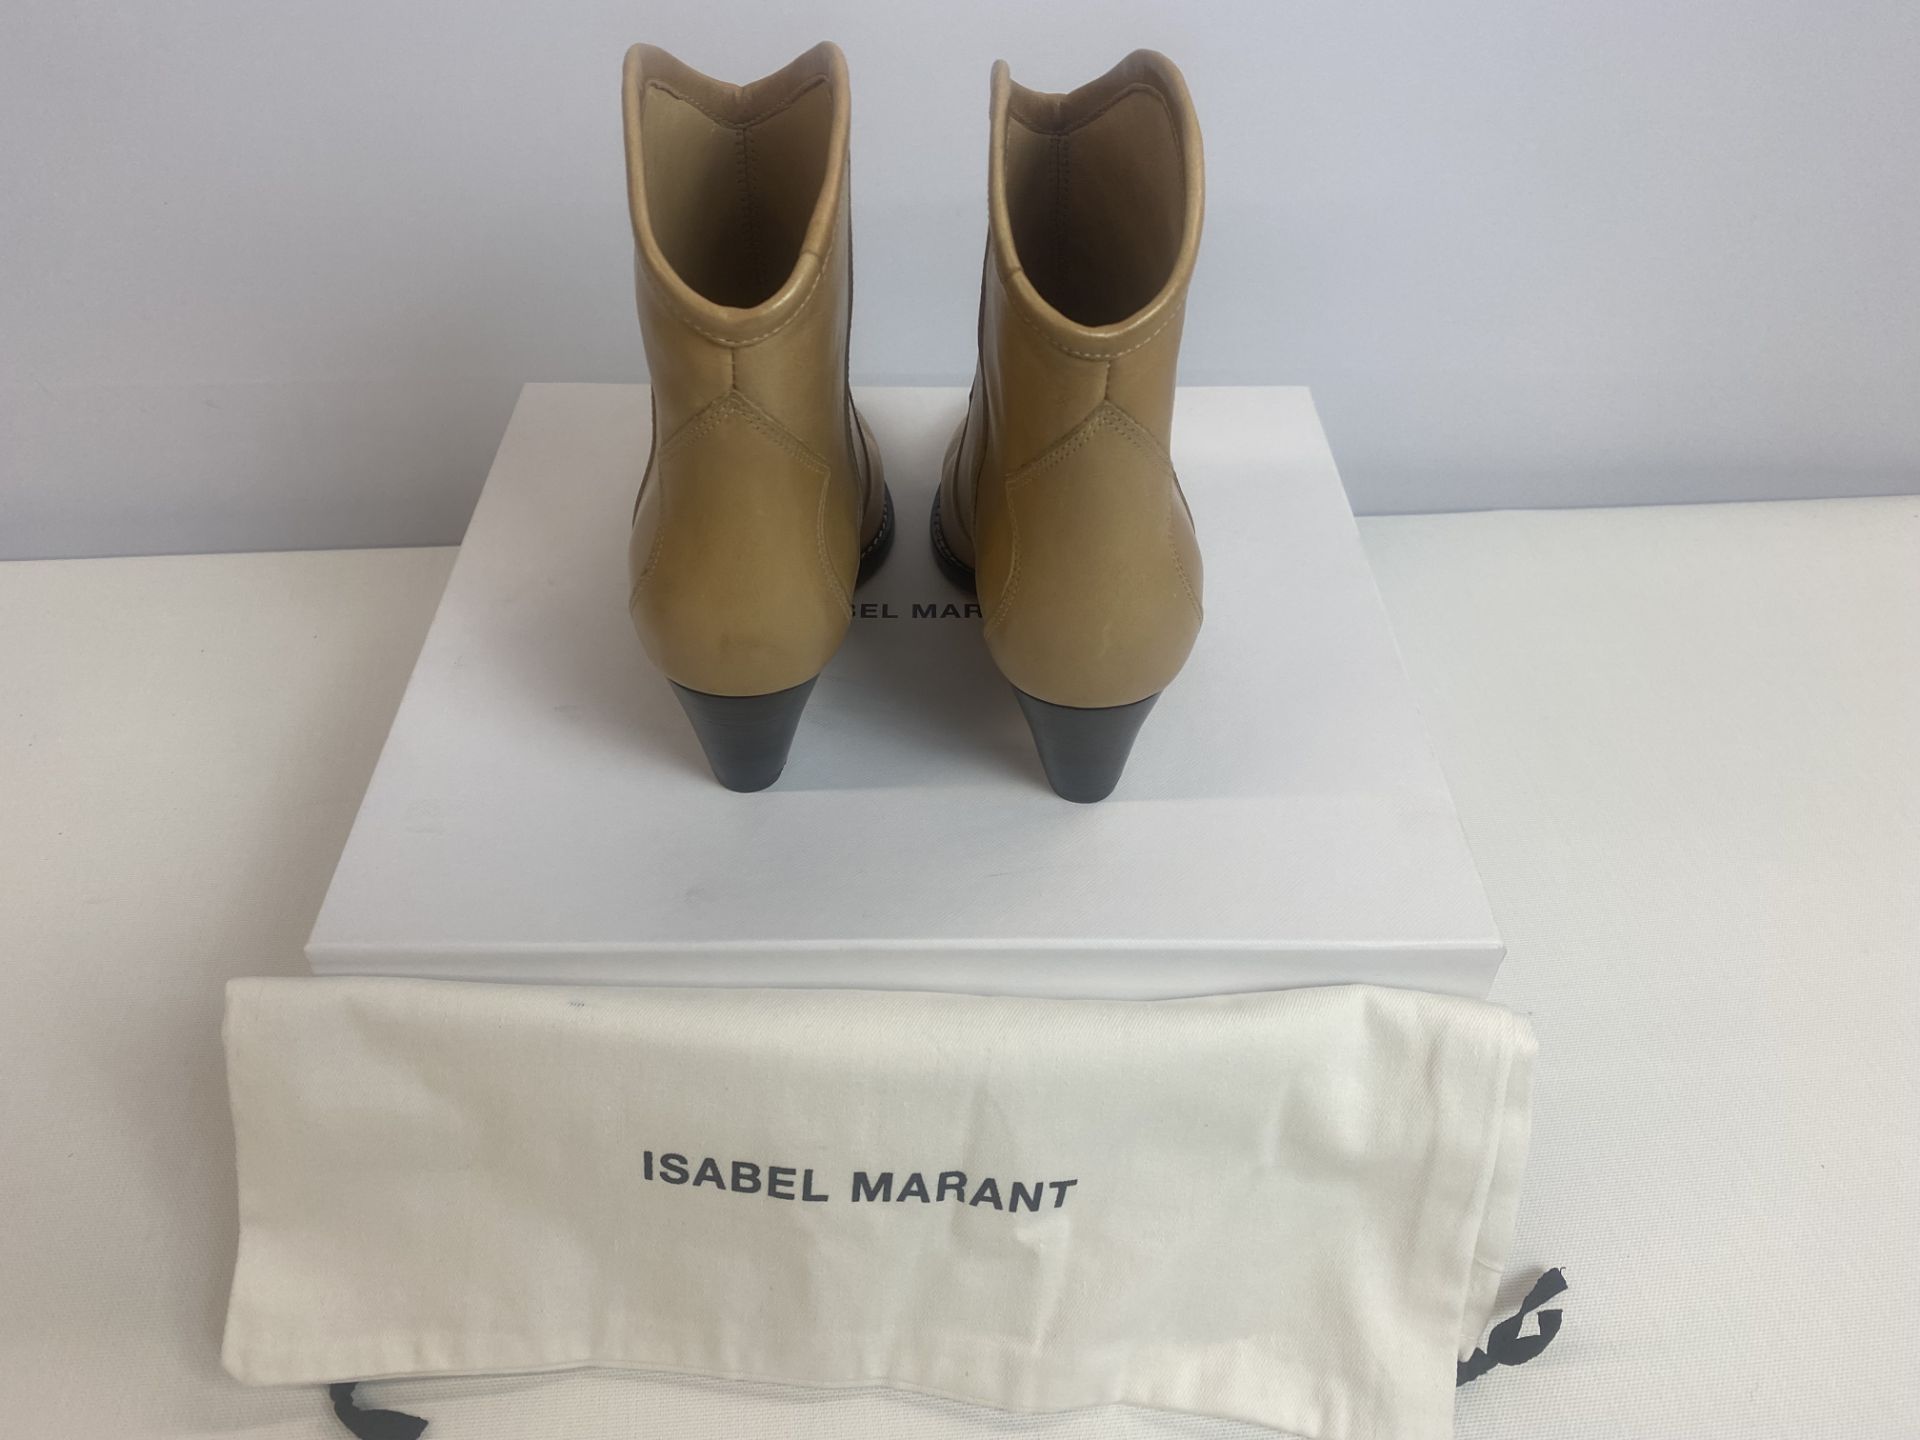 Isabel Marant Bootie Darizo Western Ankle FEMININE SANTIA, Size: 37, Color: BEIGE, Retail Price: $ - Image 2 of 3